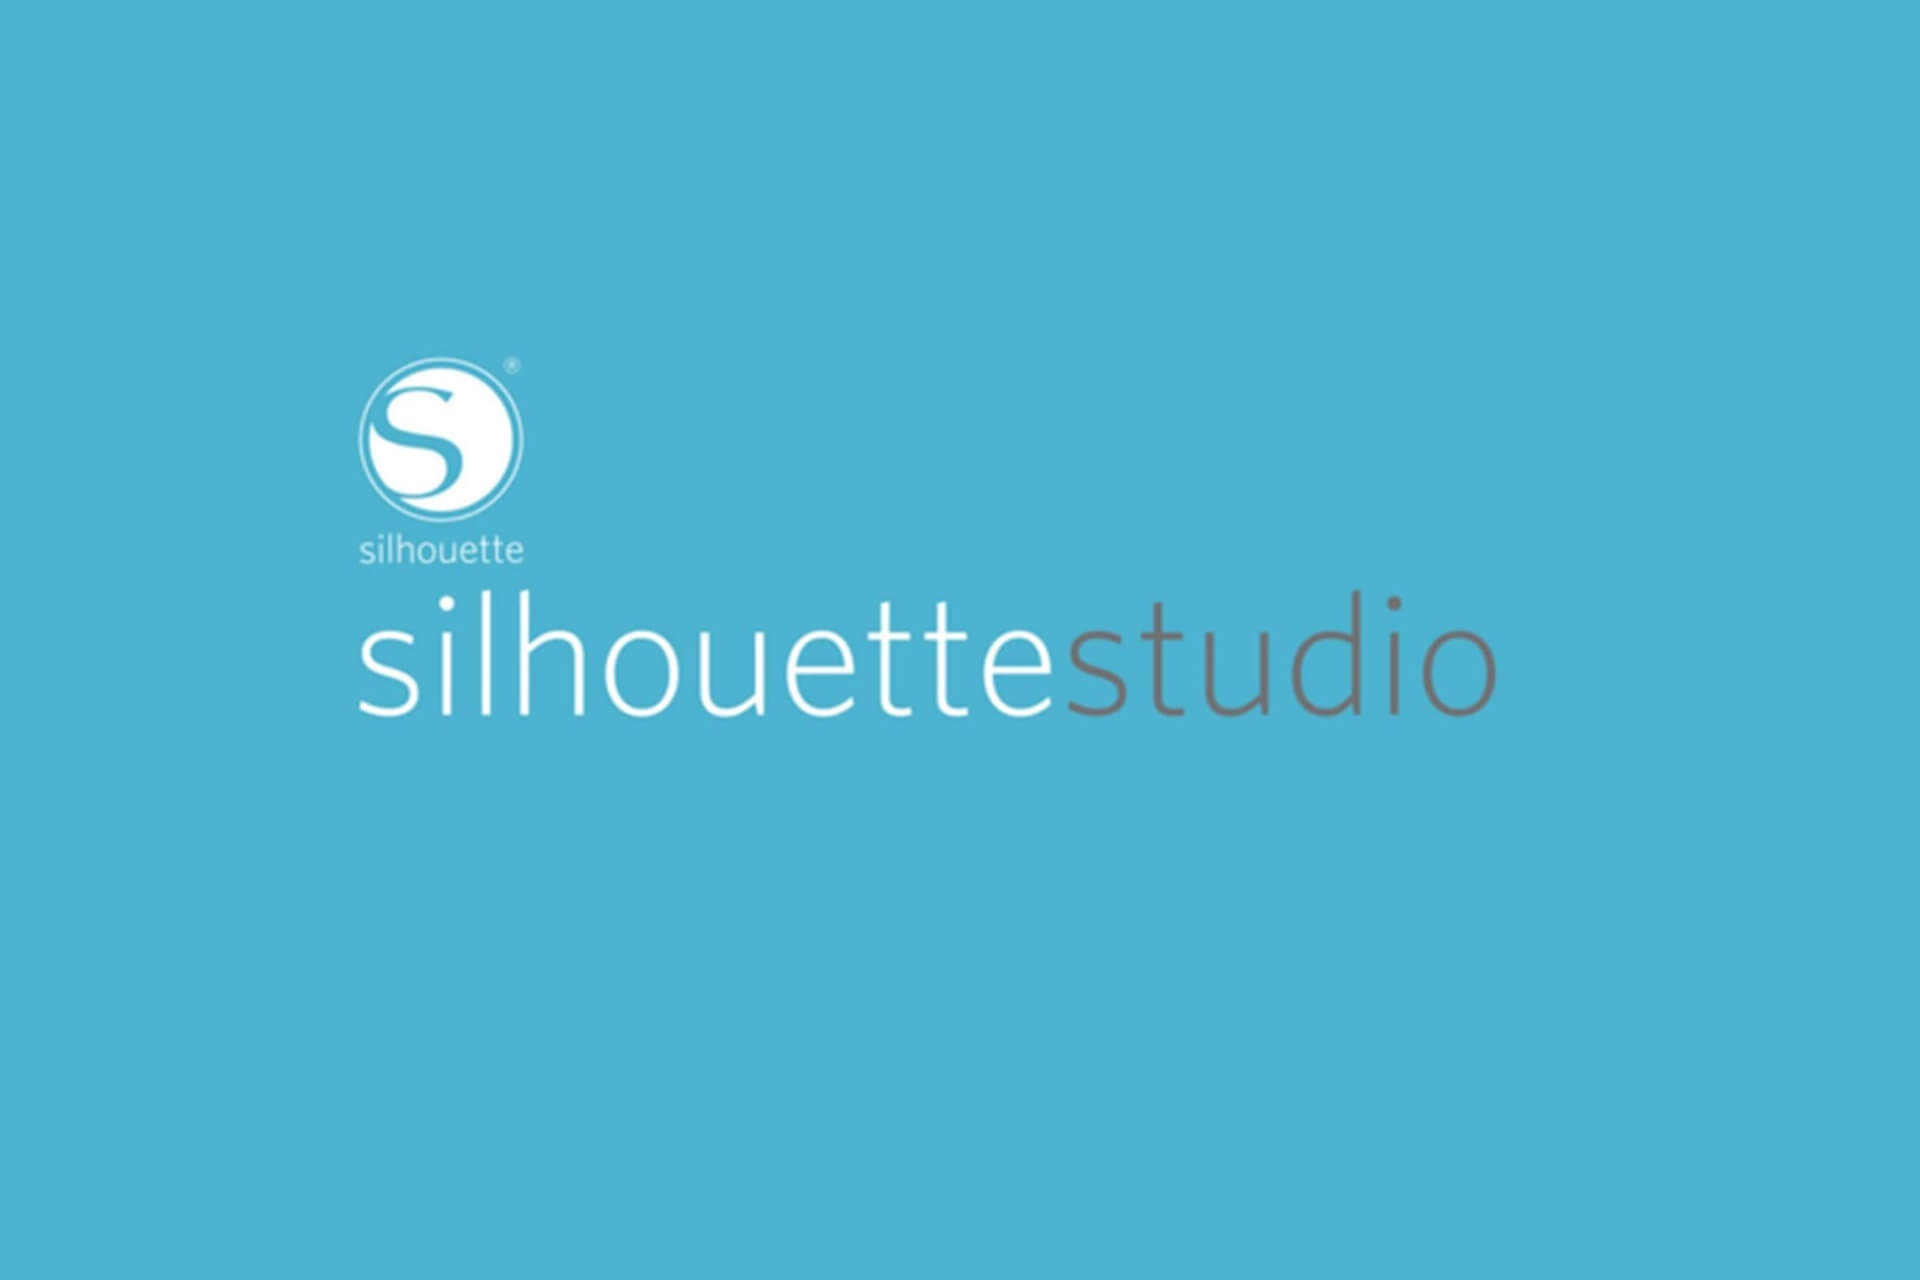 Silhouette Studio won't update